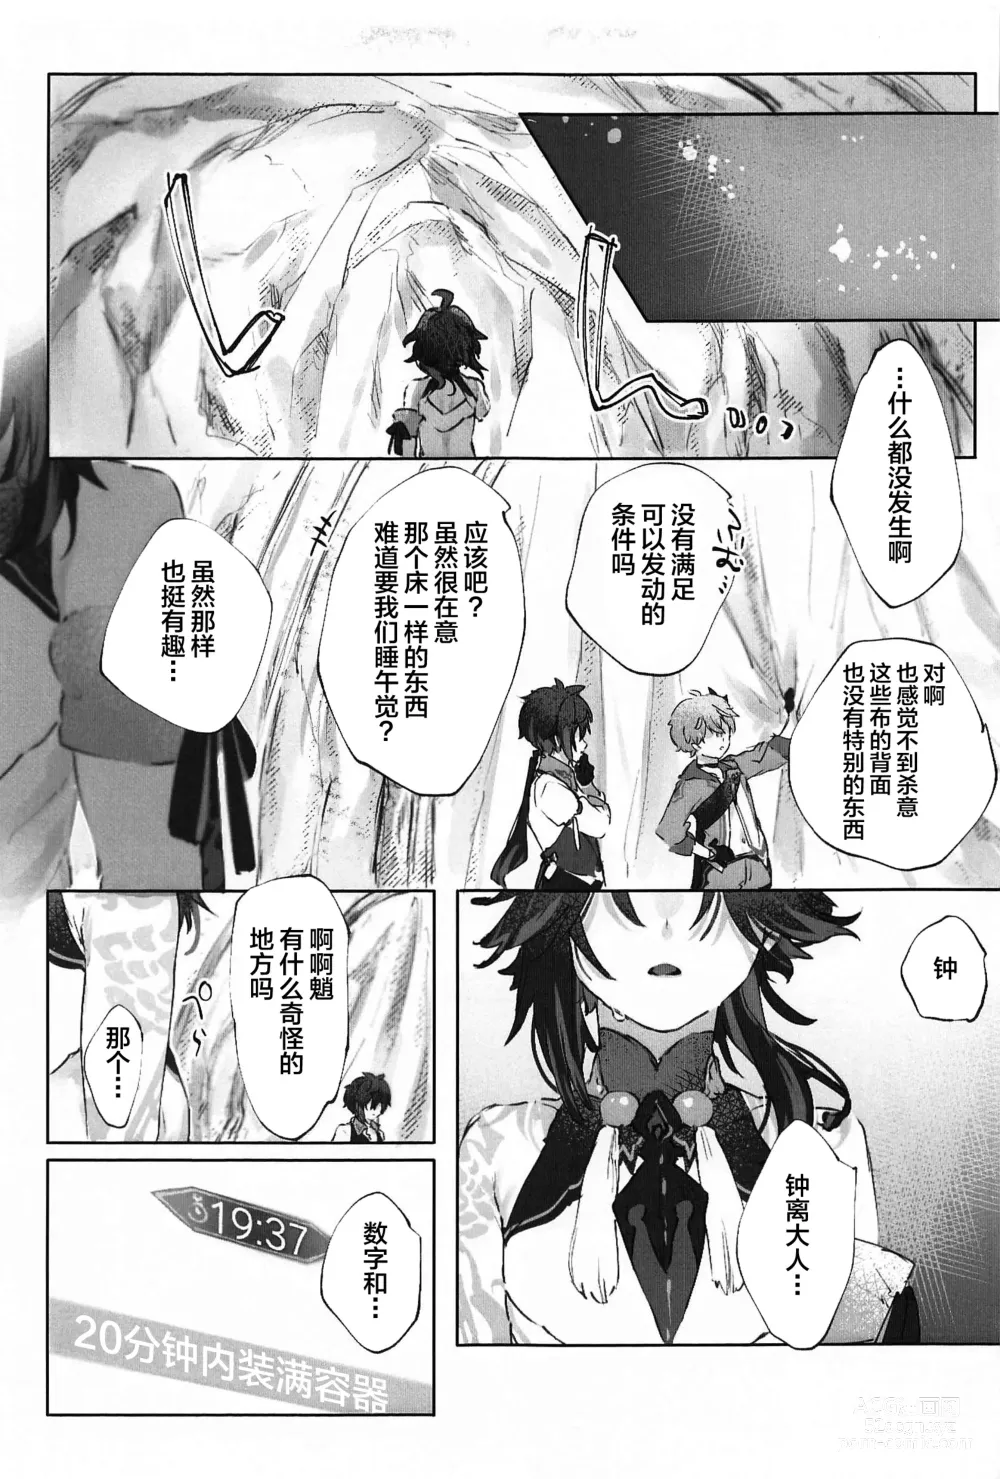 Page 17 of doujinshi Okawari.